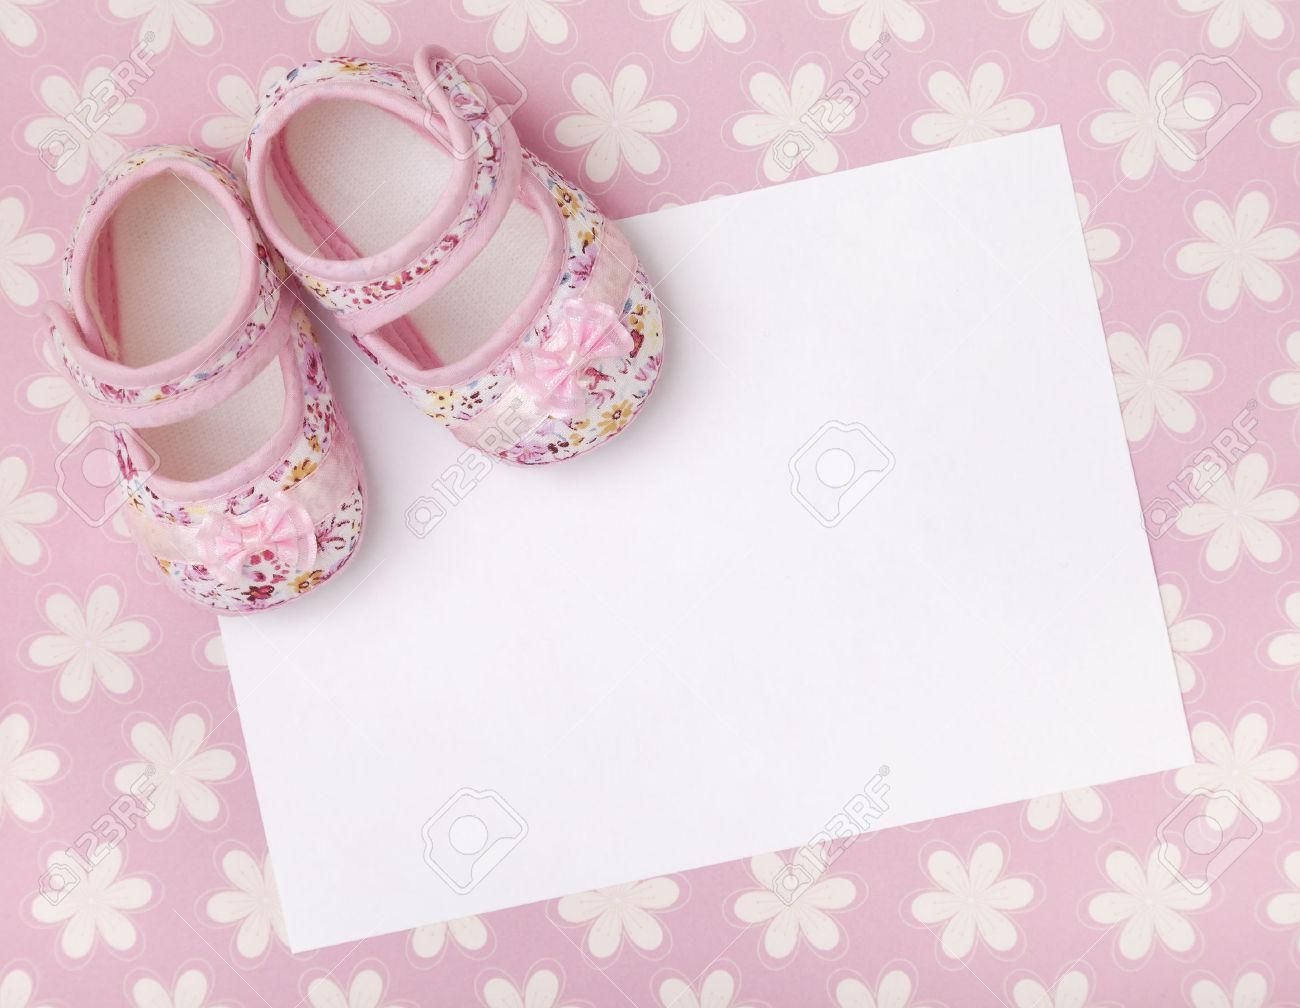 baby wallpaper design,pink,product,footwear,shoe,pattern